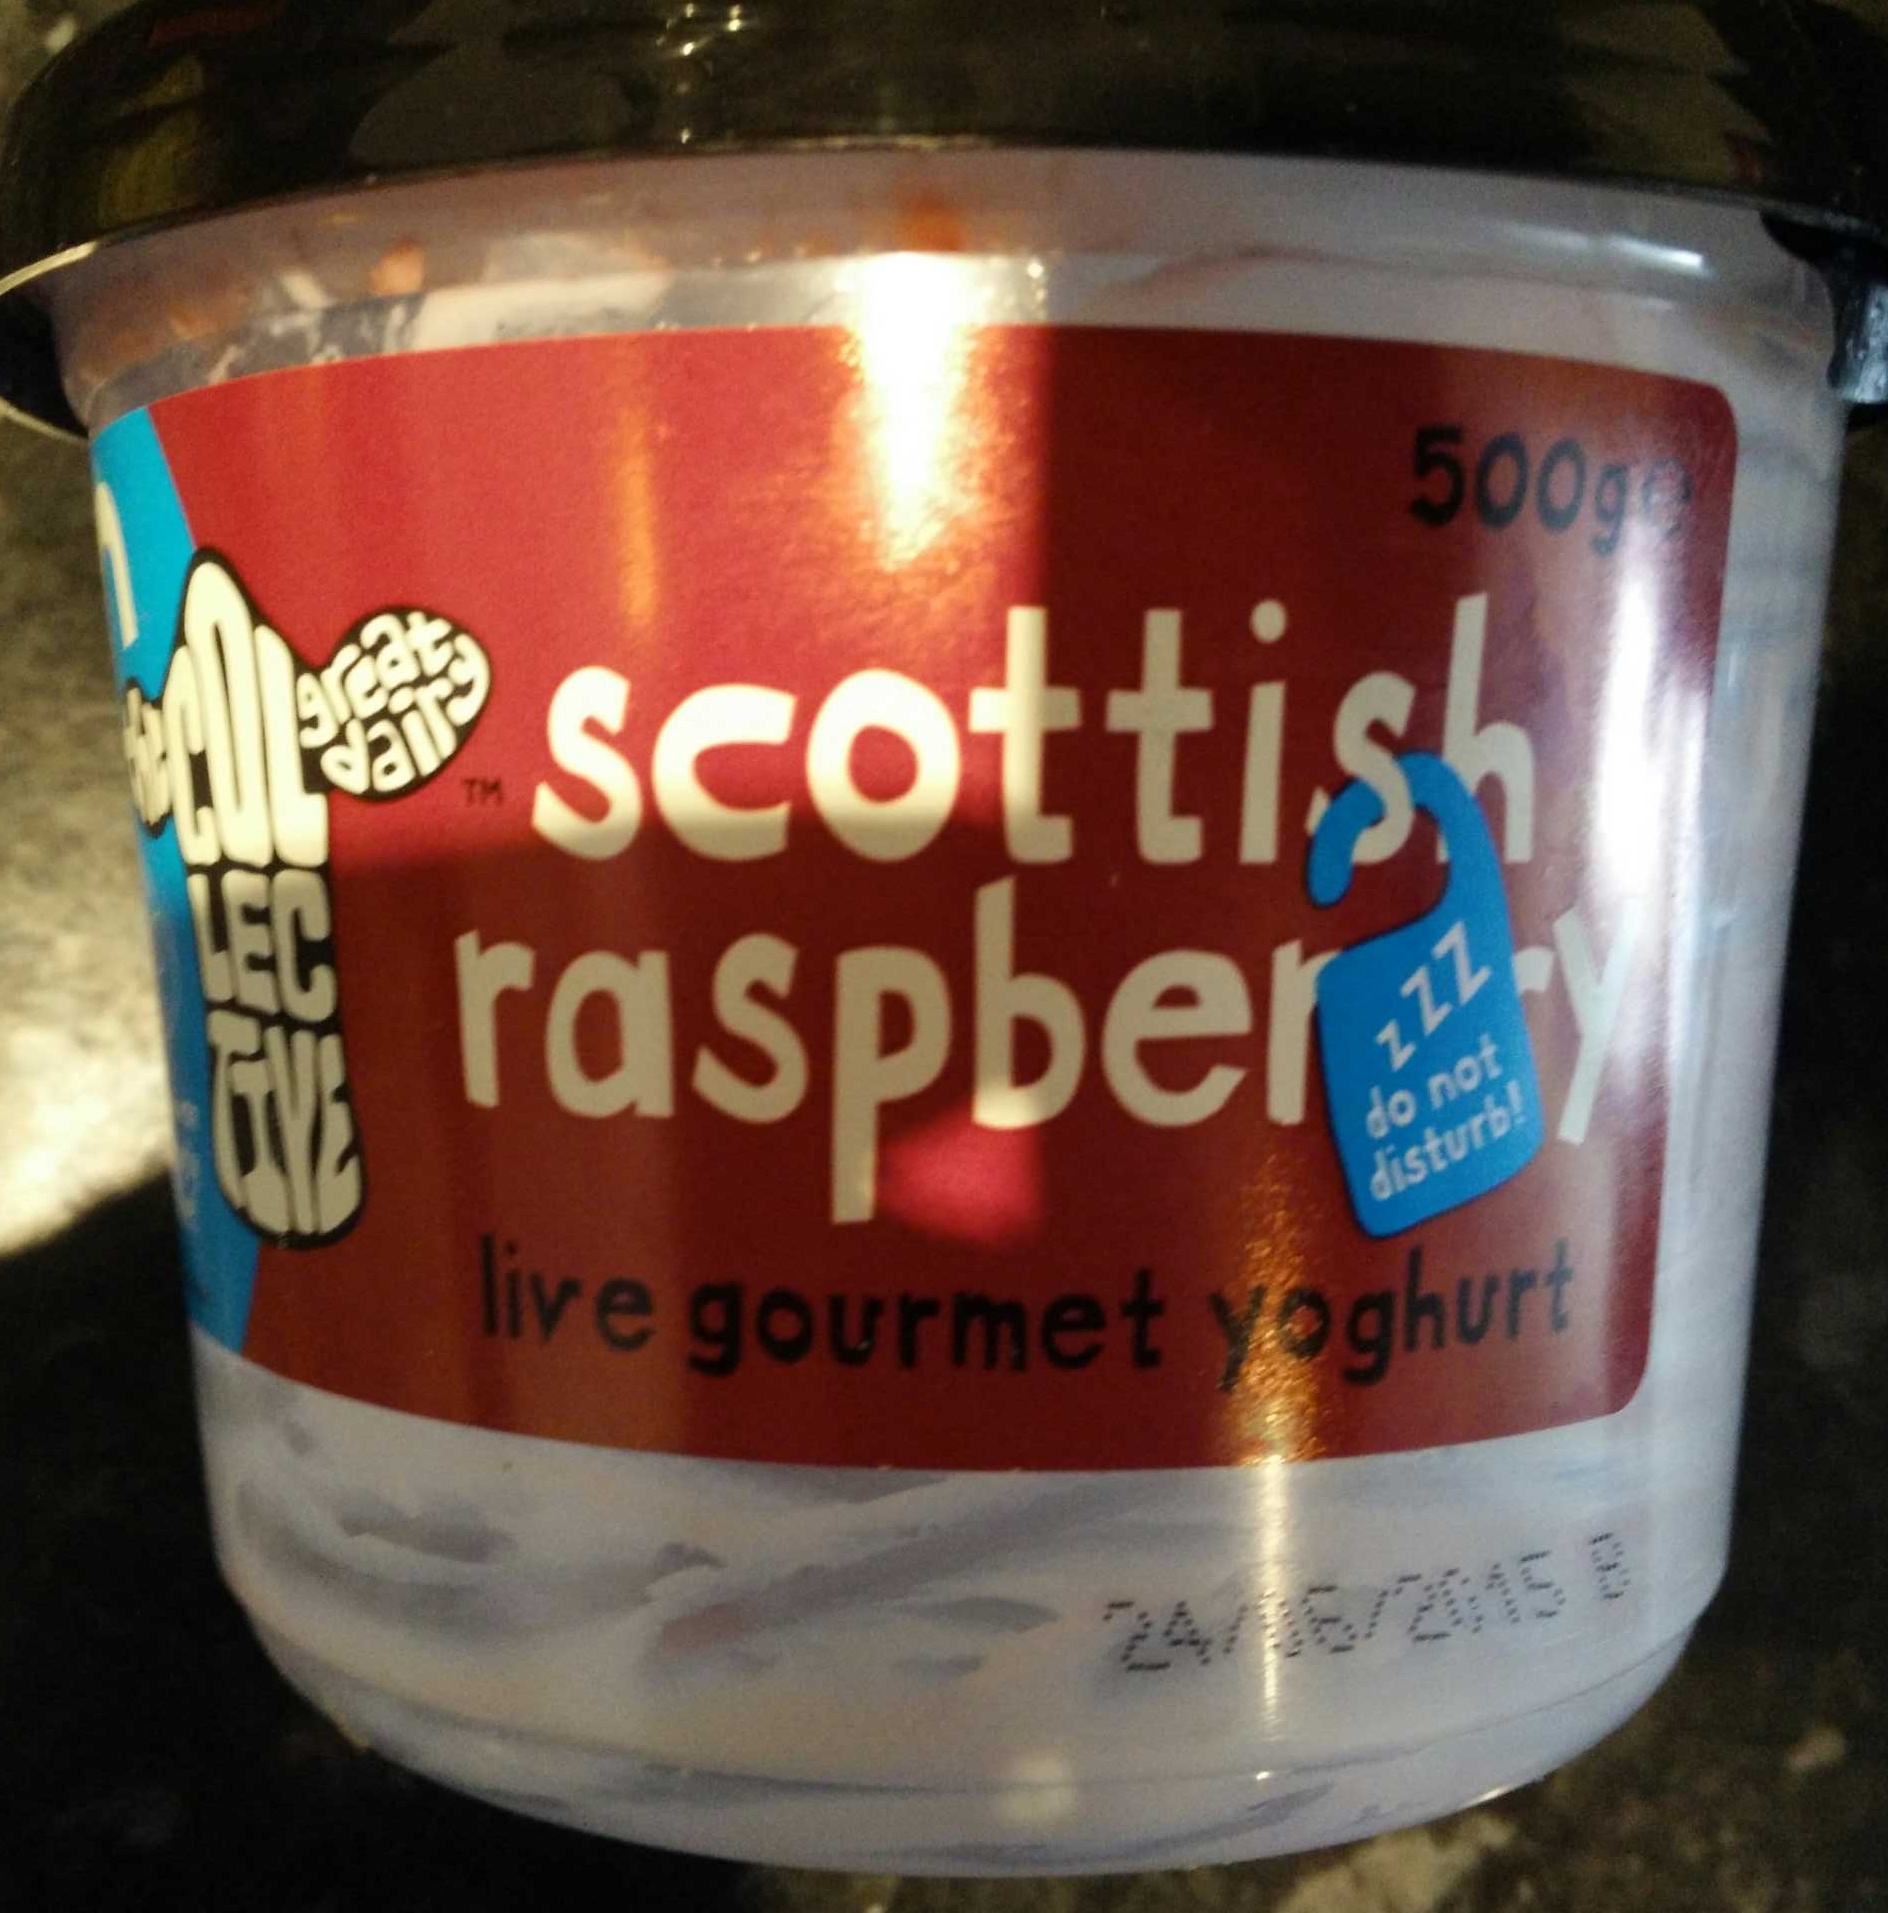 Scottish Raspberry live gourmet yoghurt - Product - en